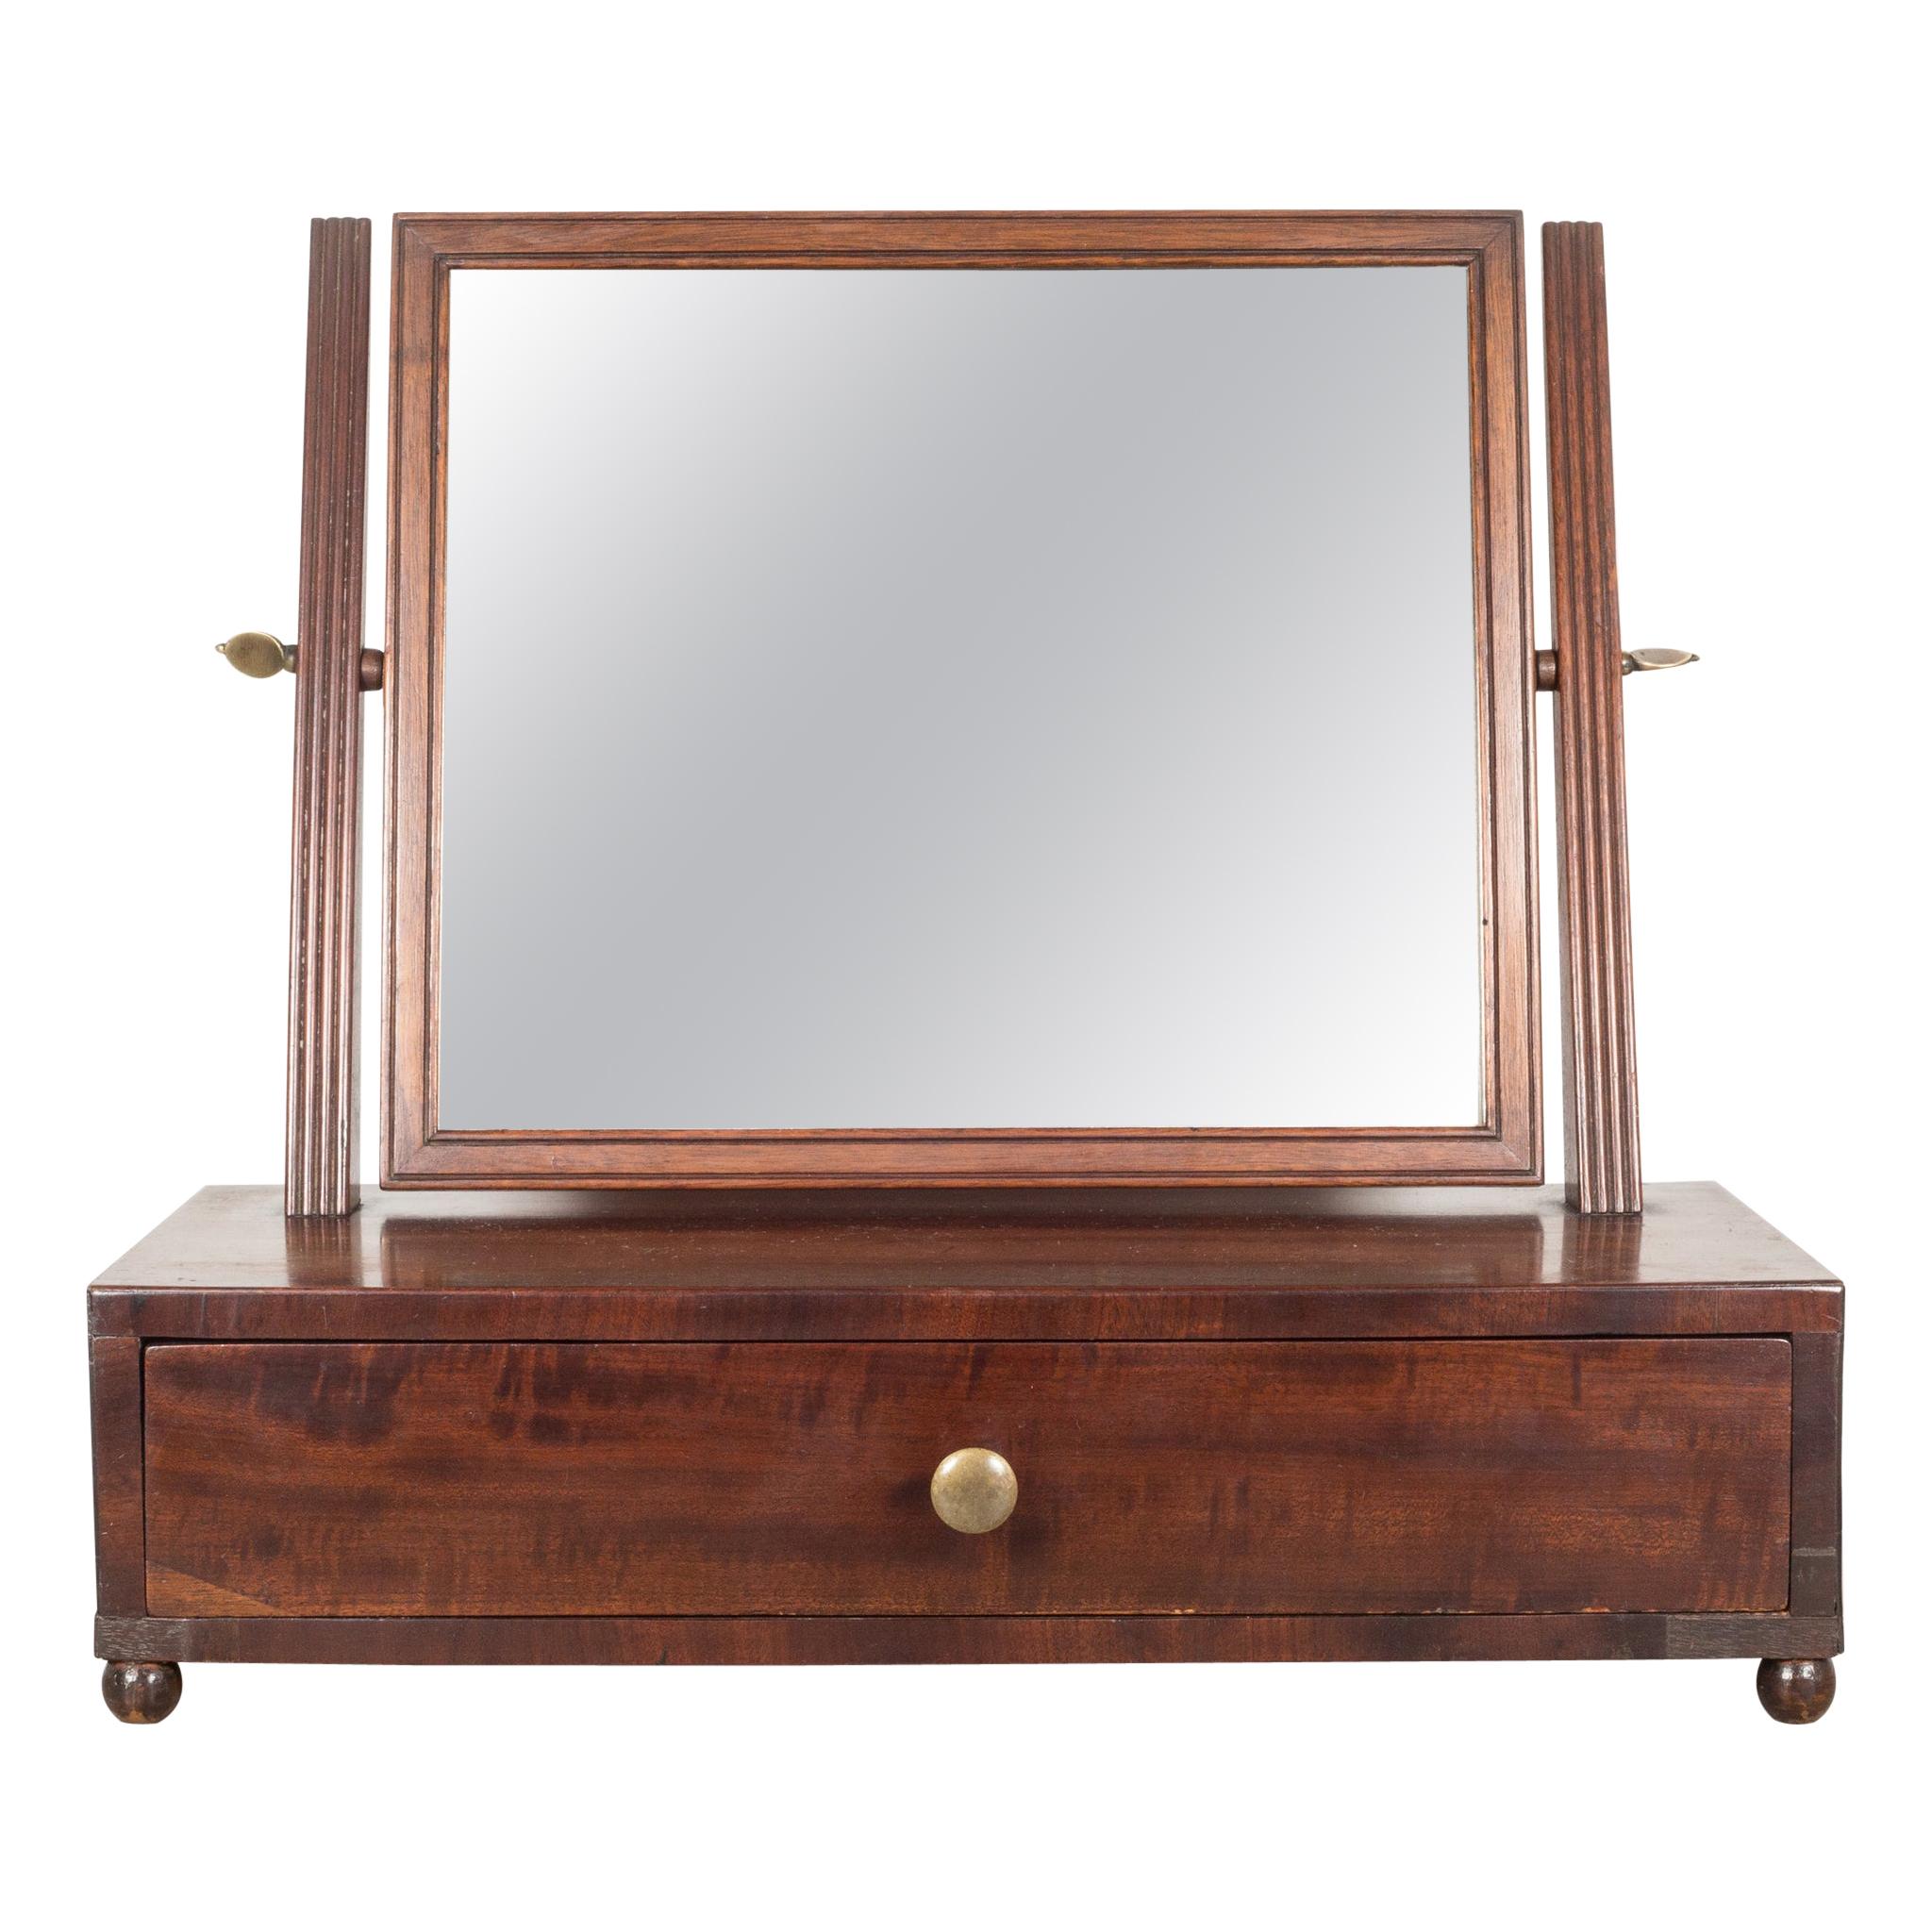 19th C. Mahogany and Bronze Table Top Vanity Shaving Mirror, c.1840-1870